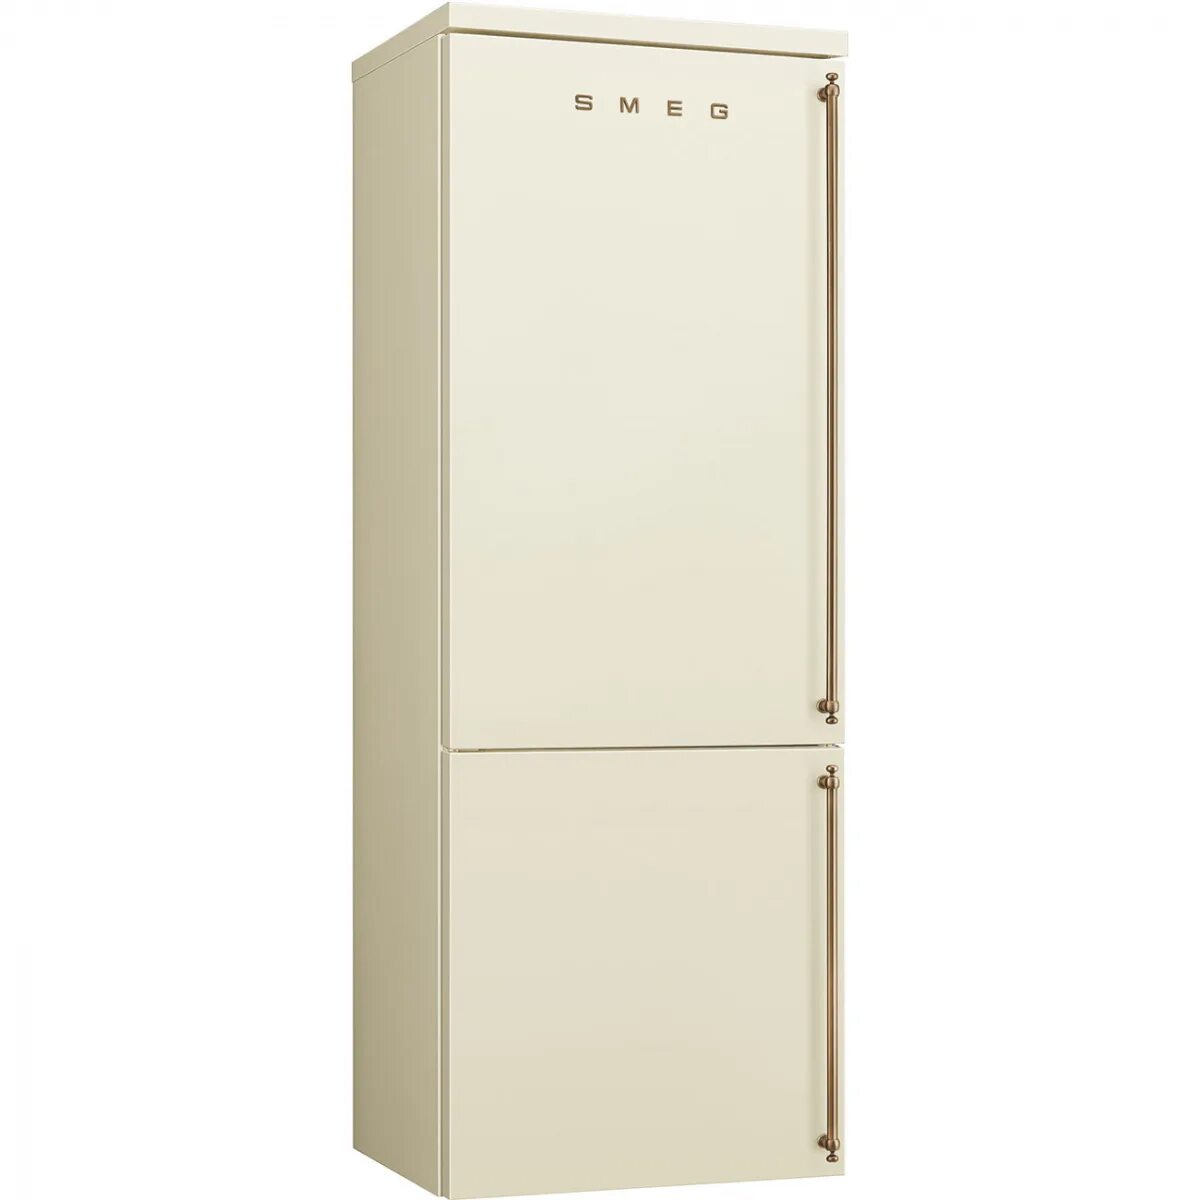 Холодильник Sharp SJ-xe59pmwh. Холодильник Smeg fa8003pos. Sharp SJ-xe55pmbe. Холодильники Smeg fa860p. Купить двухкамерный холодильник в интернете